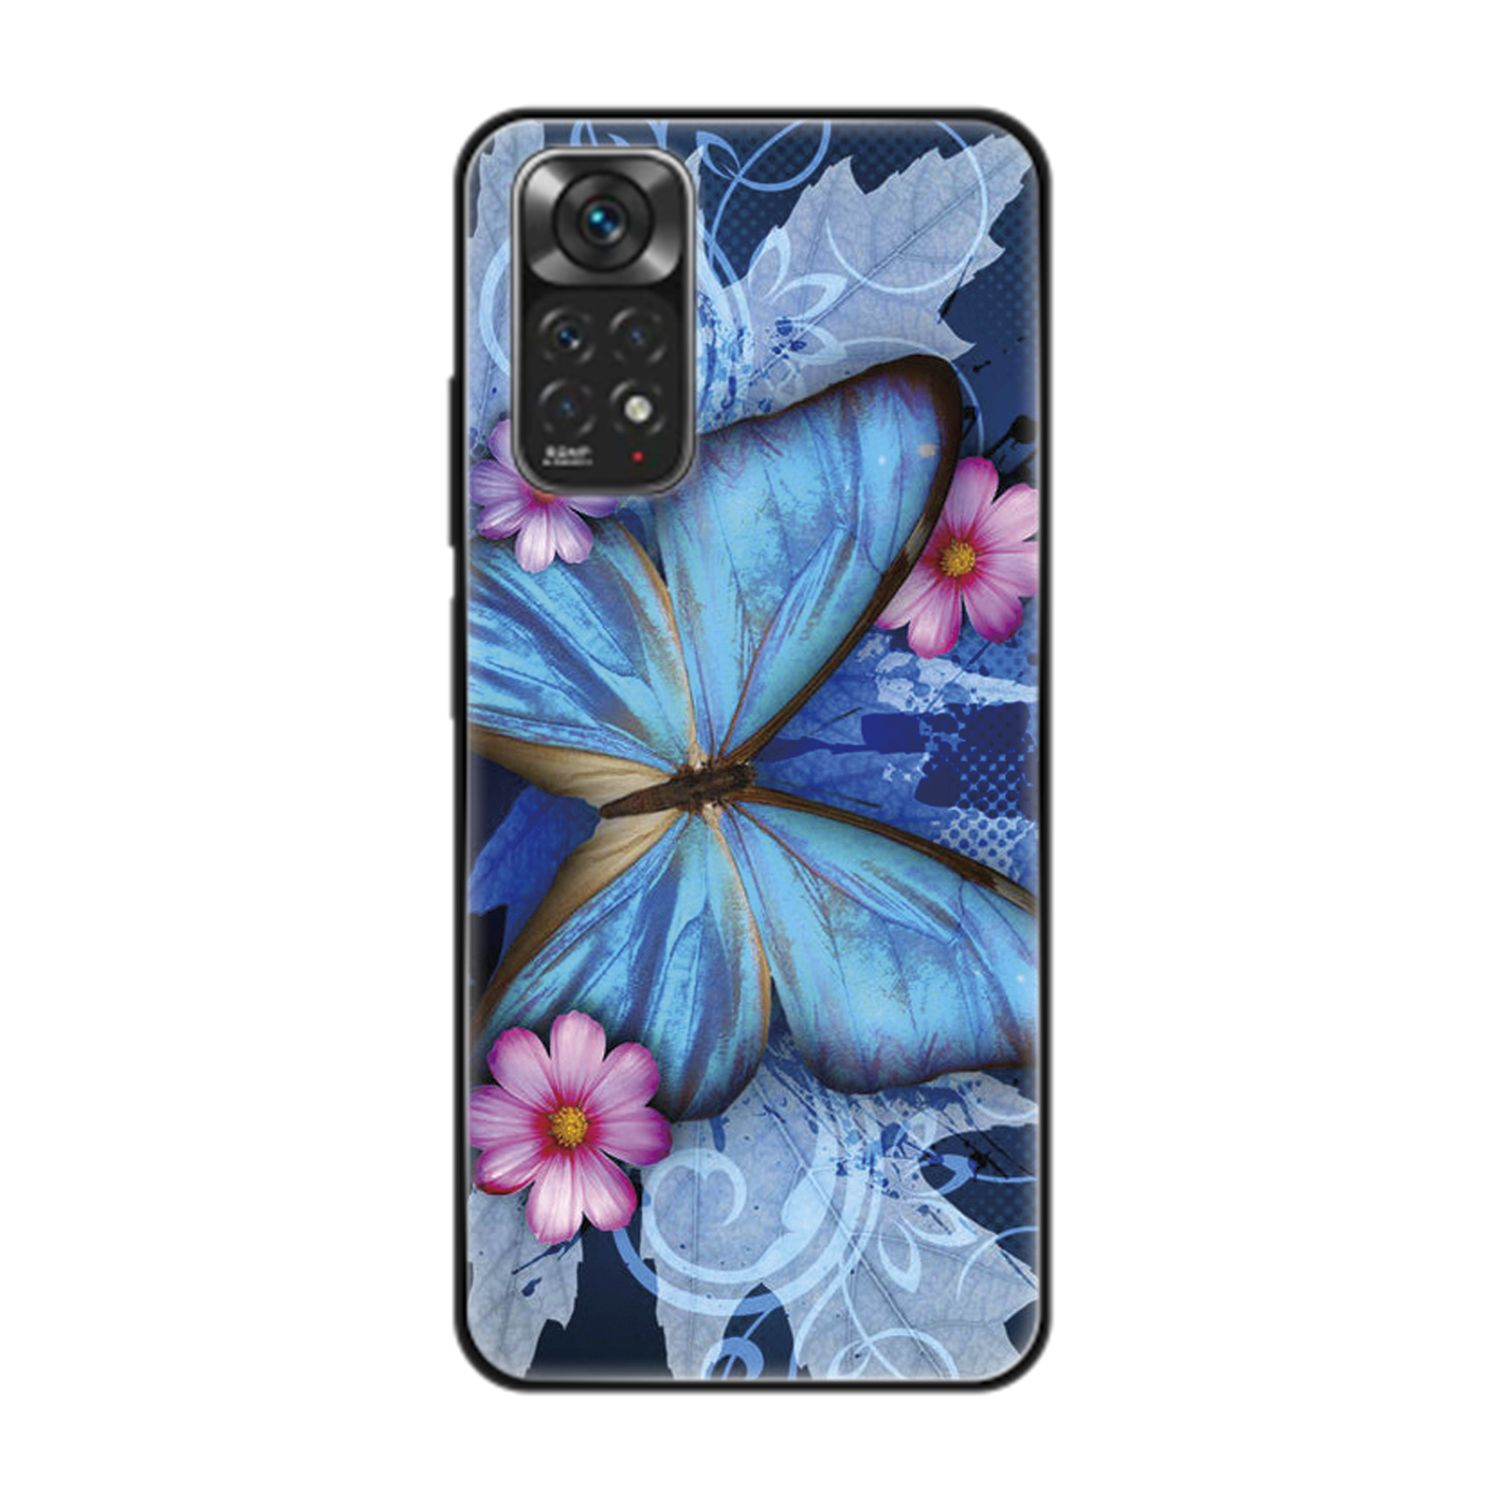 Case, Blau 11, Backcover, Schmetterling Redmi DESIGN Note KÖNIG Xiaomi,